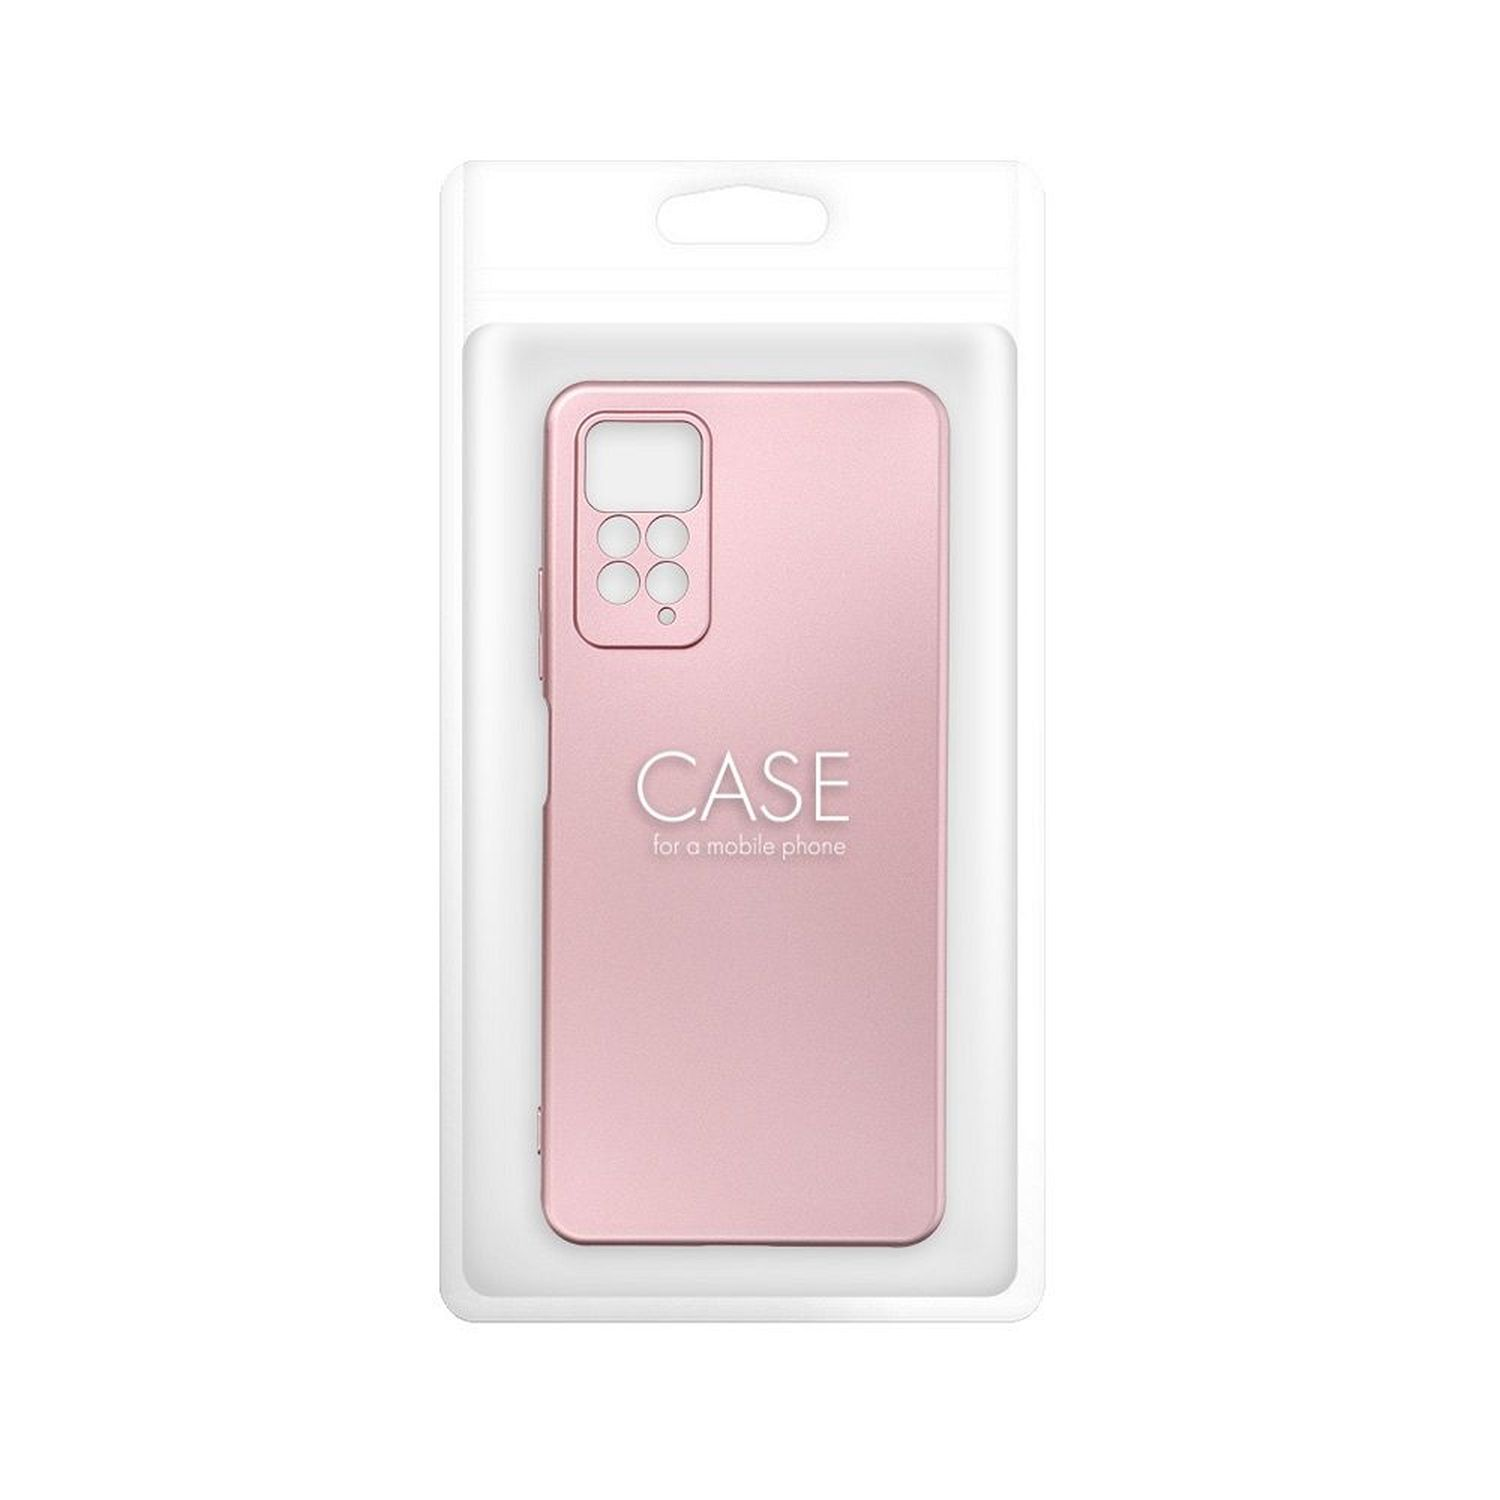 5G, Pro Backcover, COFI Note Metallic Rosa 11 Case, Xiaomi, Redmi Plus